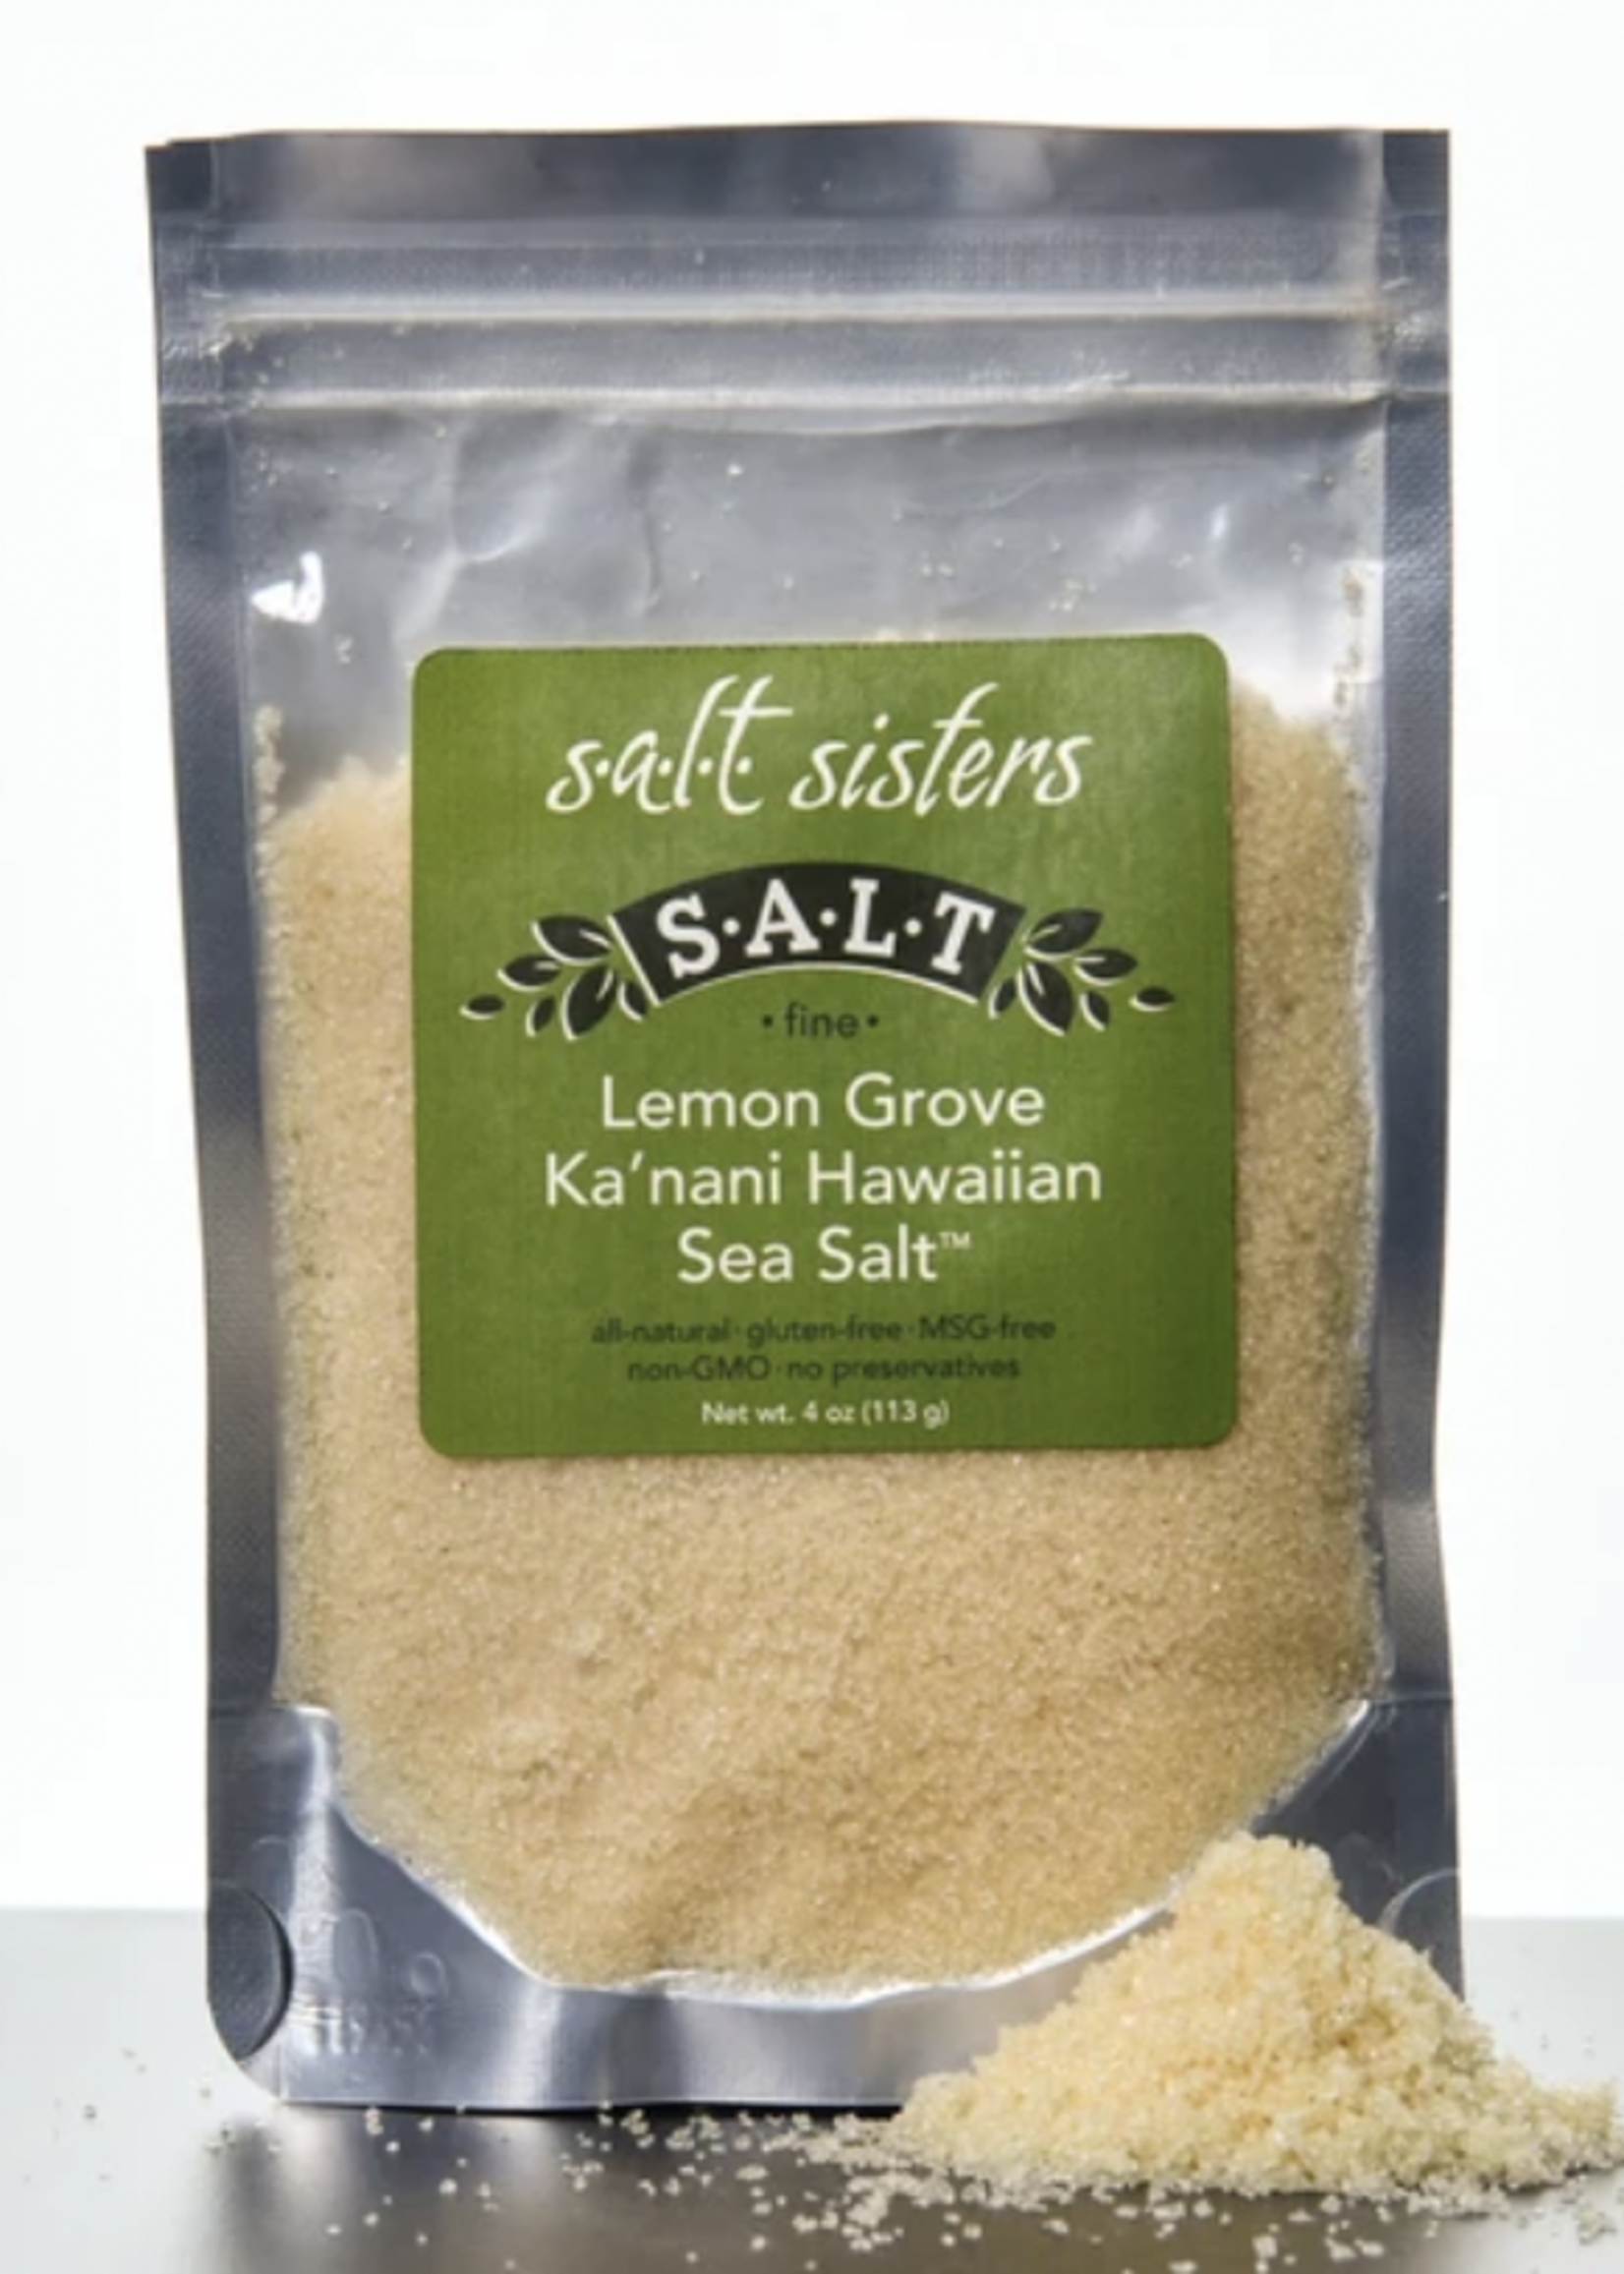 Salt Sisters Lemon Grove KA 'NANI Hawaiian Sea Salt, fine